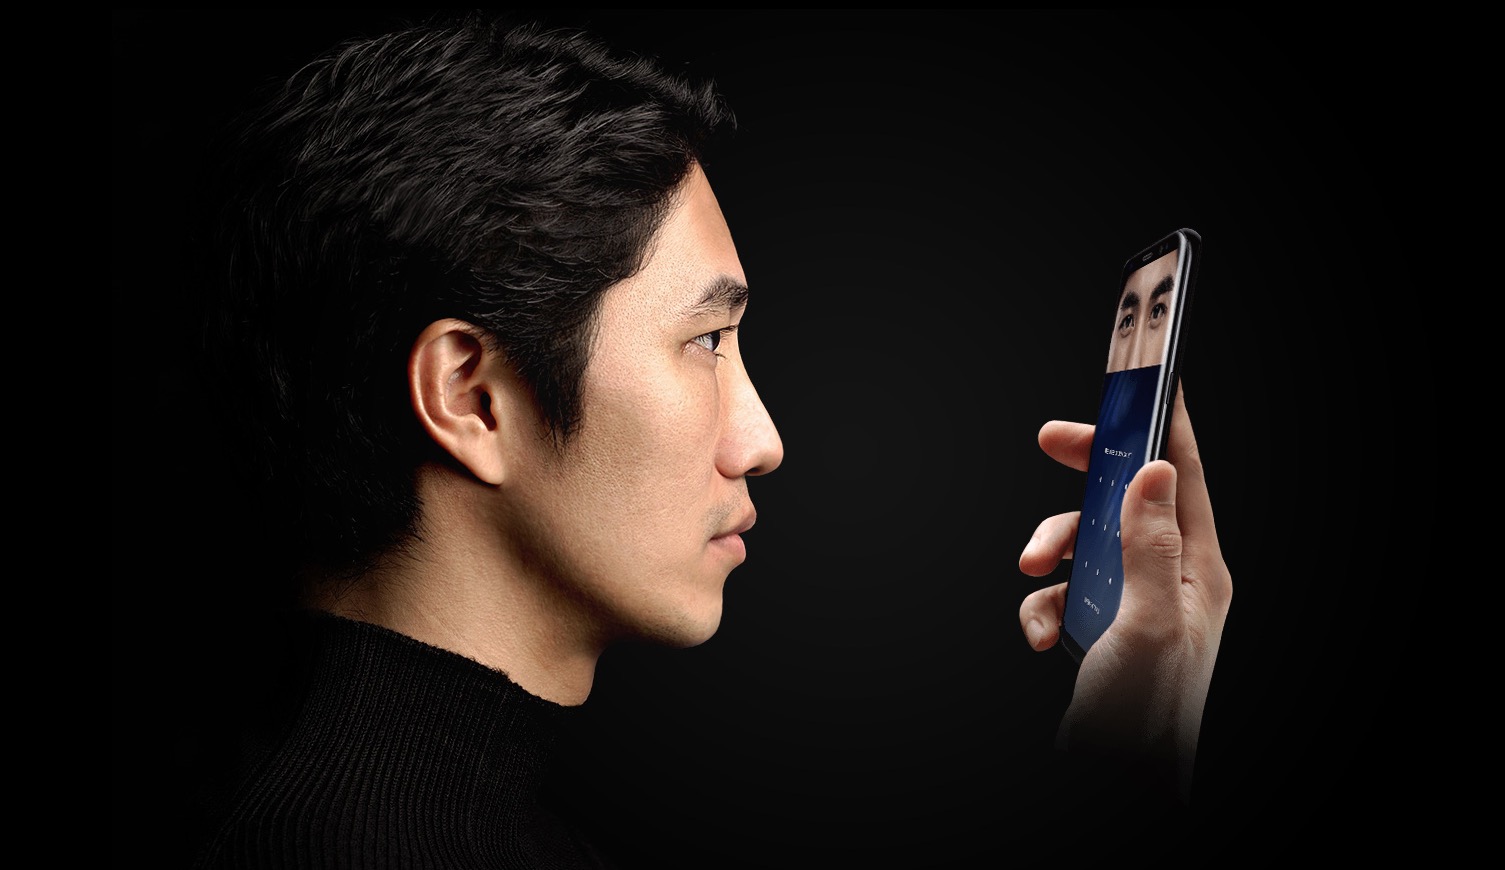 「Galaxy S10」、iPhone Xのような3D顔認証搭載か